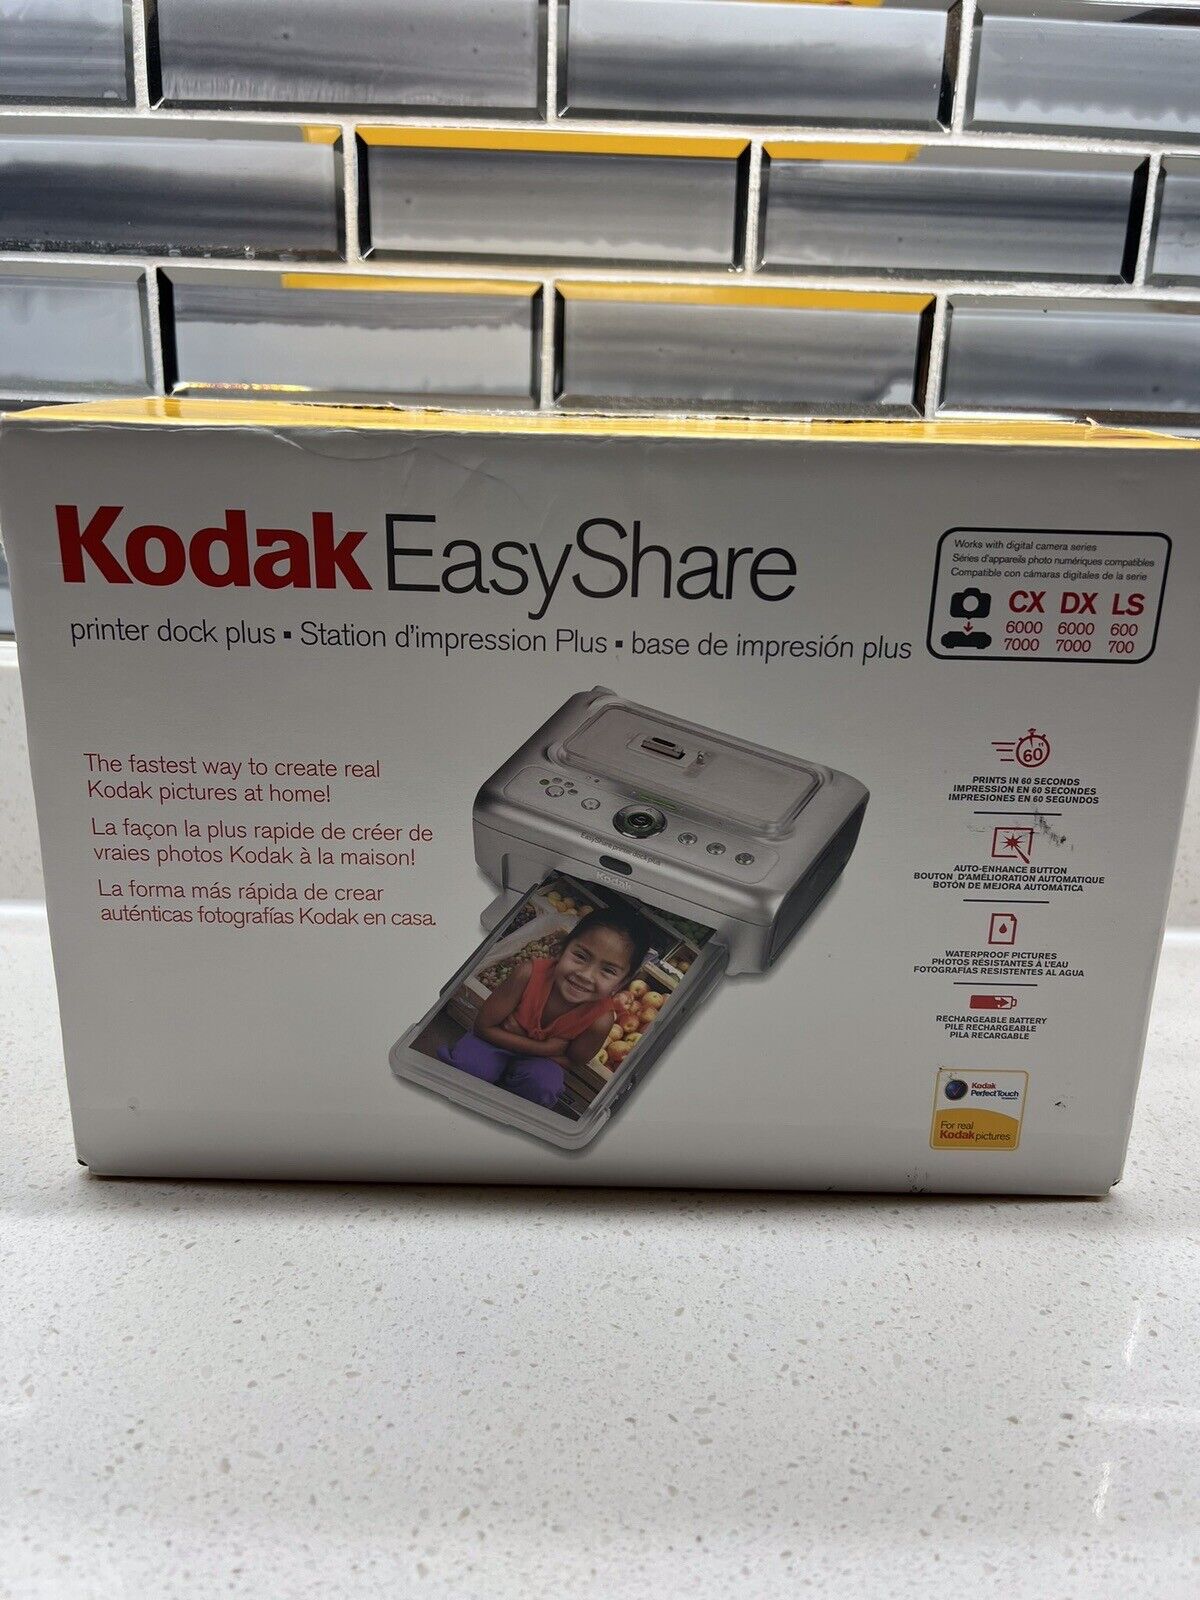 Kodak EasyShare Printer Dock Plus CX 6000 7000 DX 6000 7000 LS 600 700